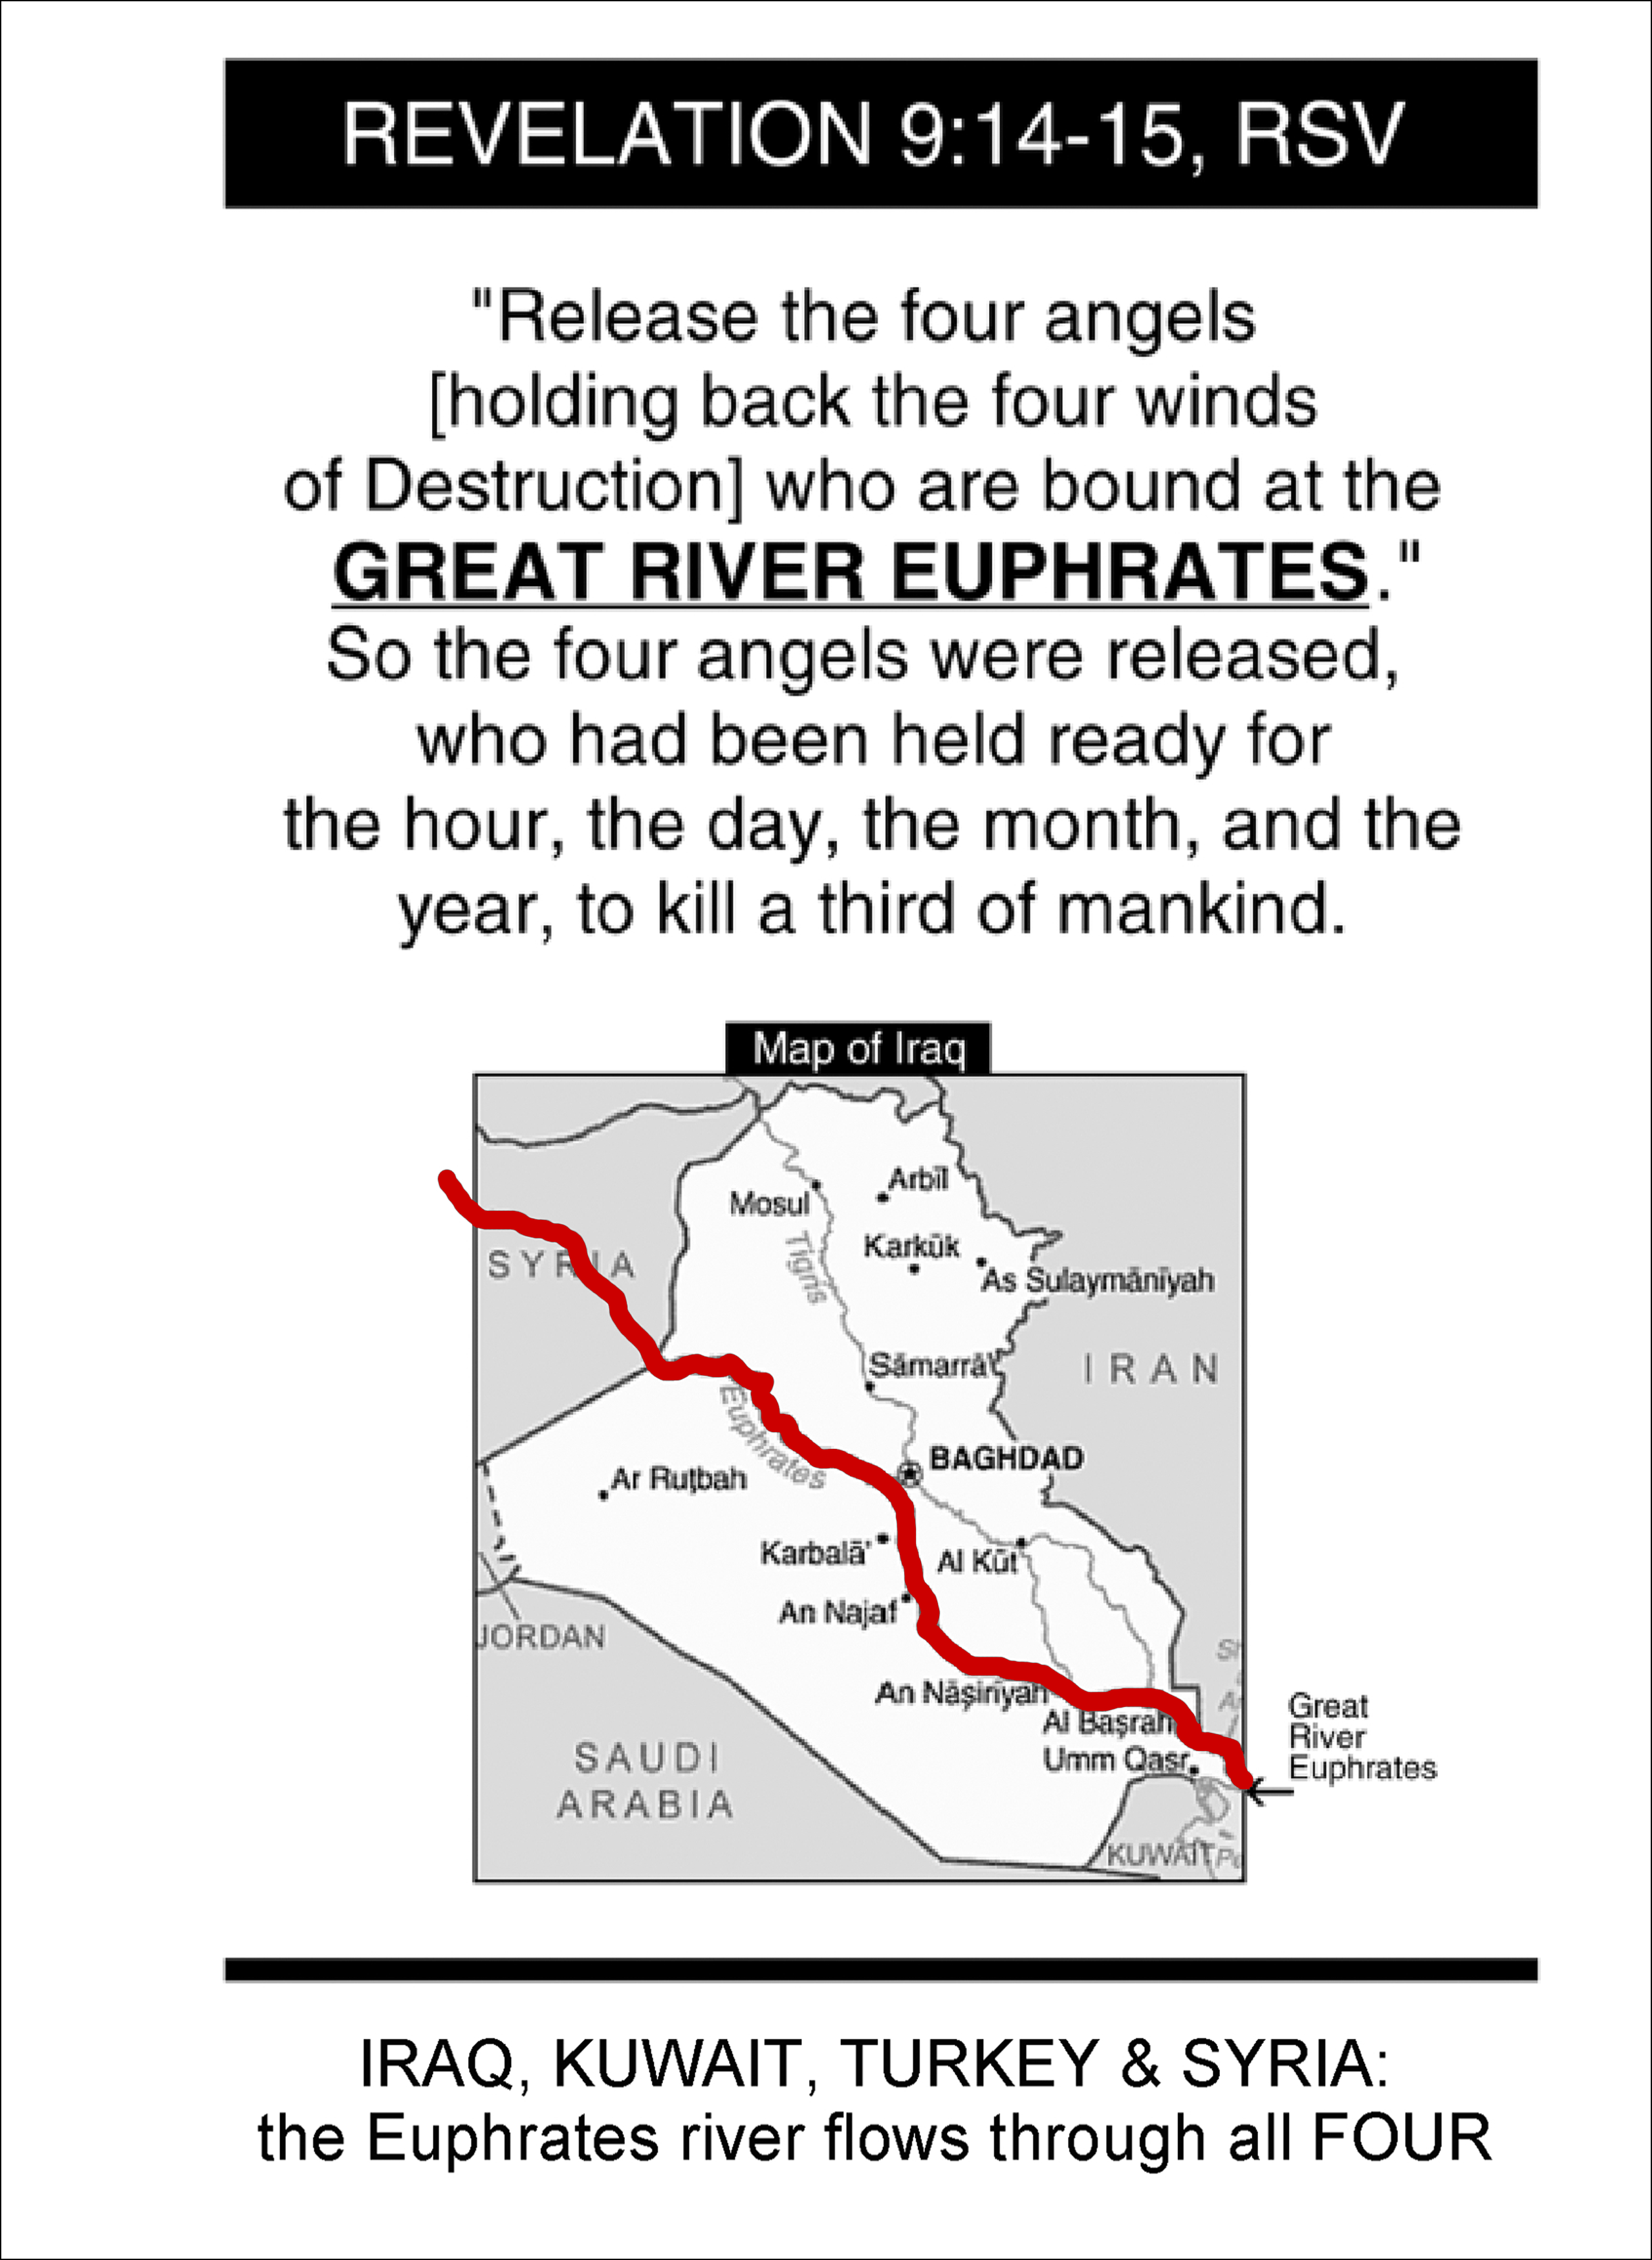 Great River Euprates Prophecy